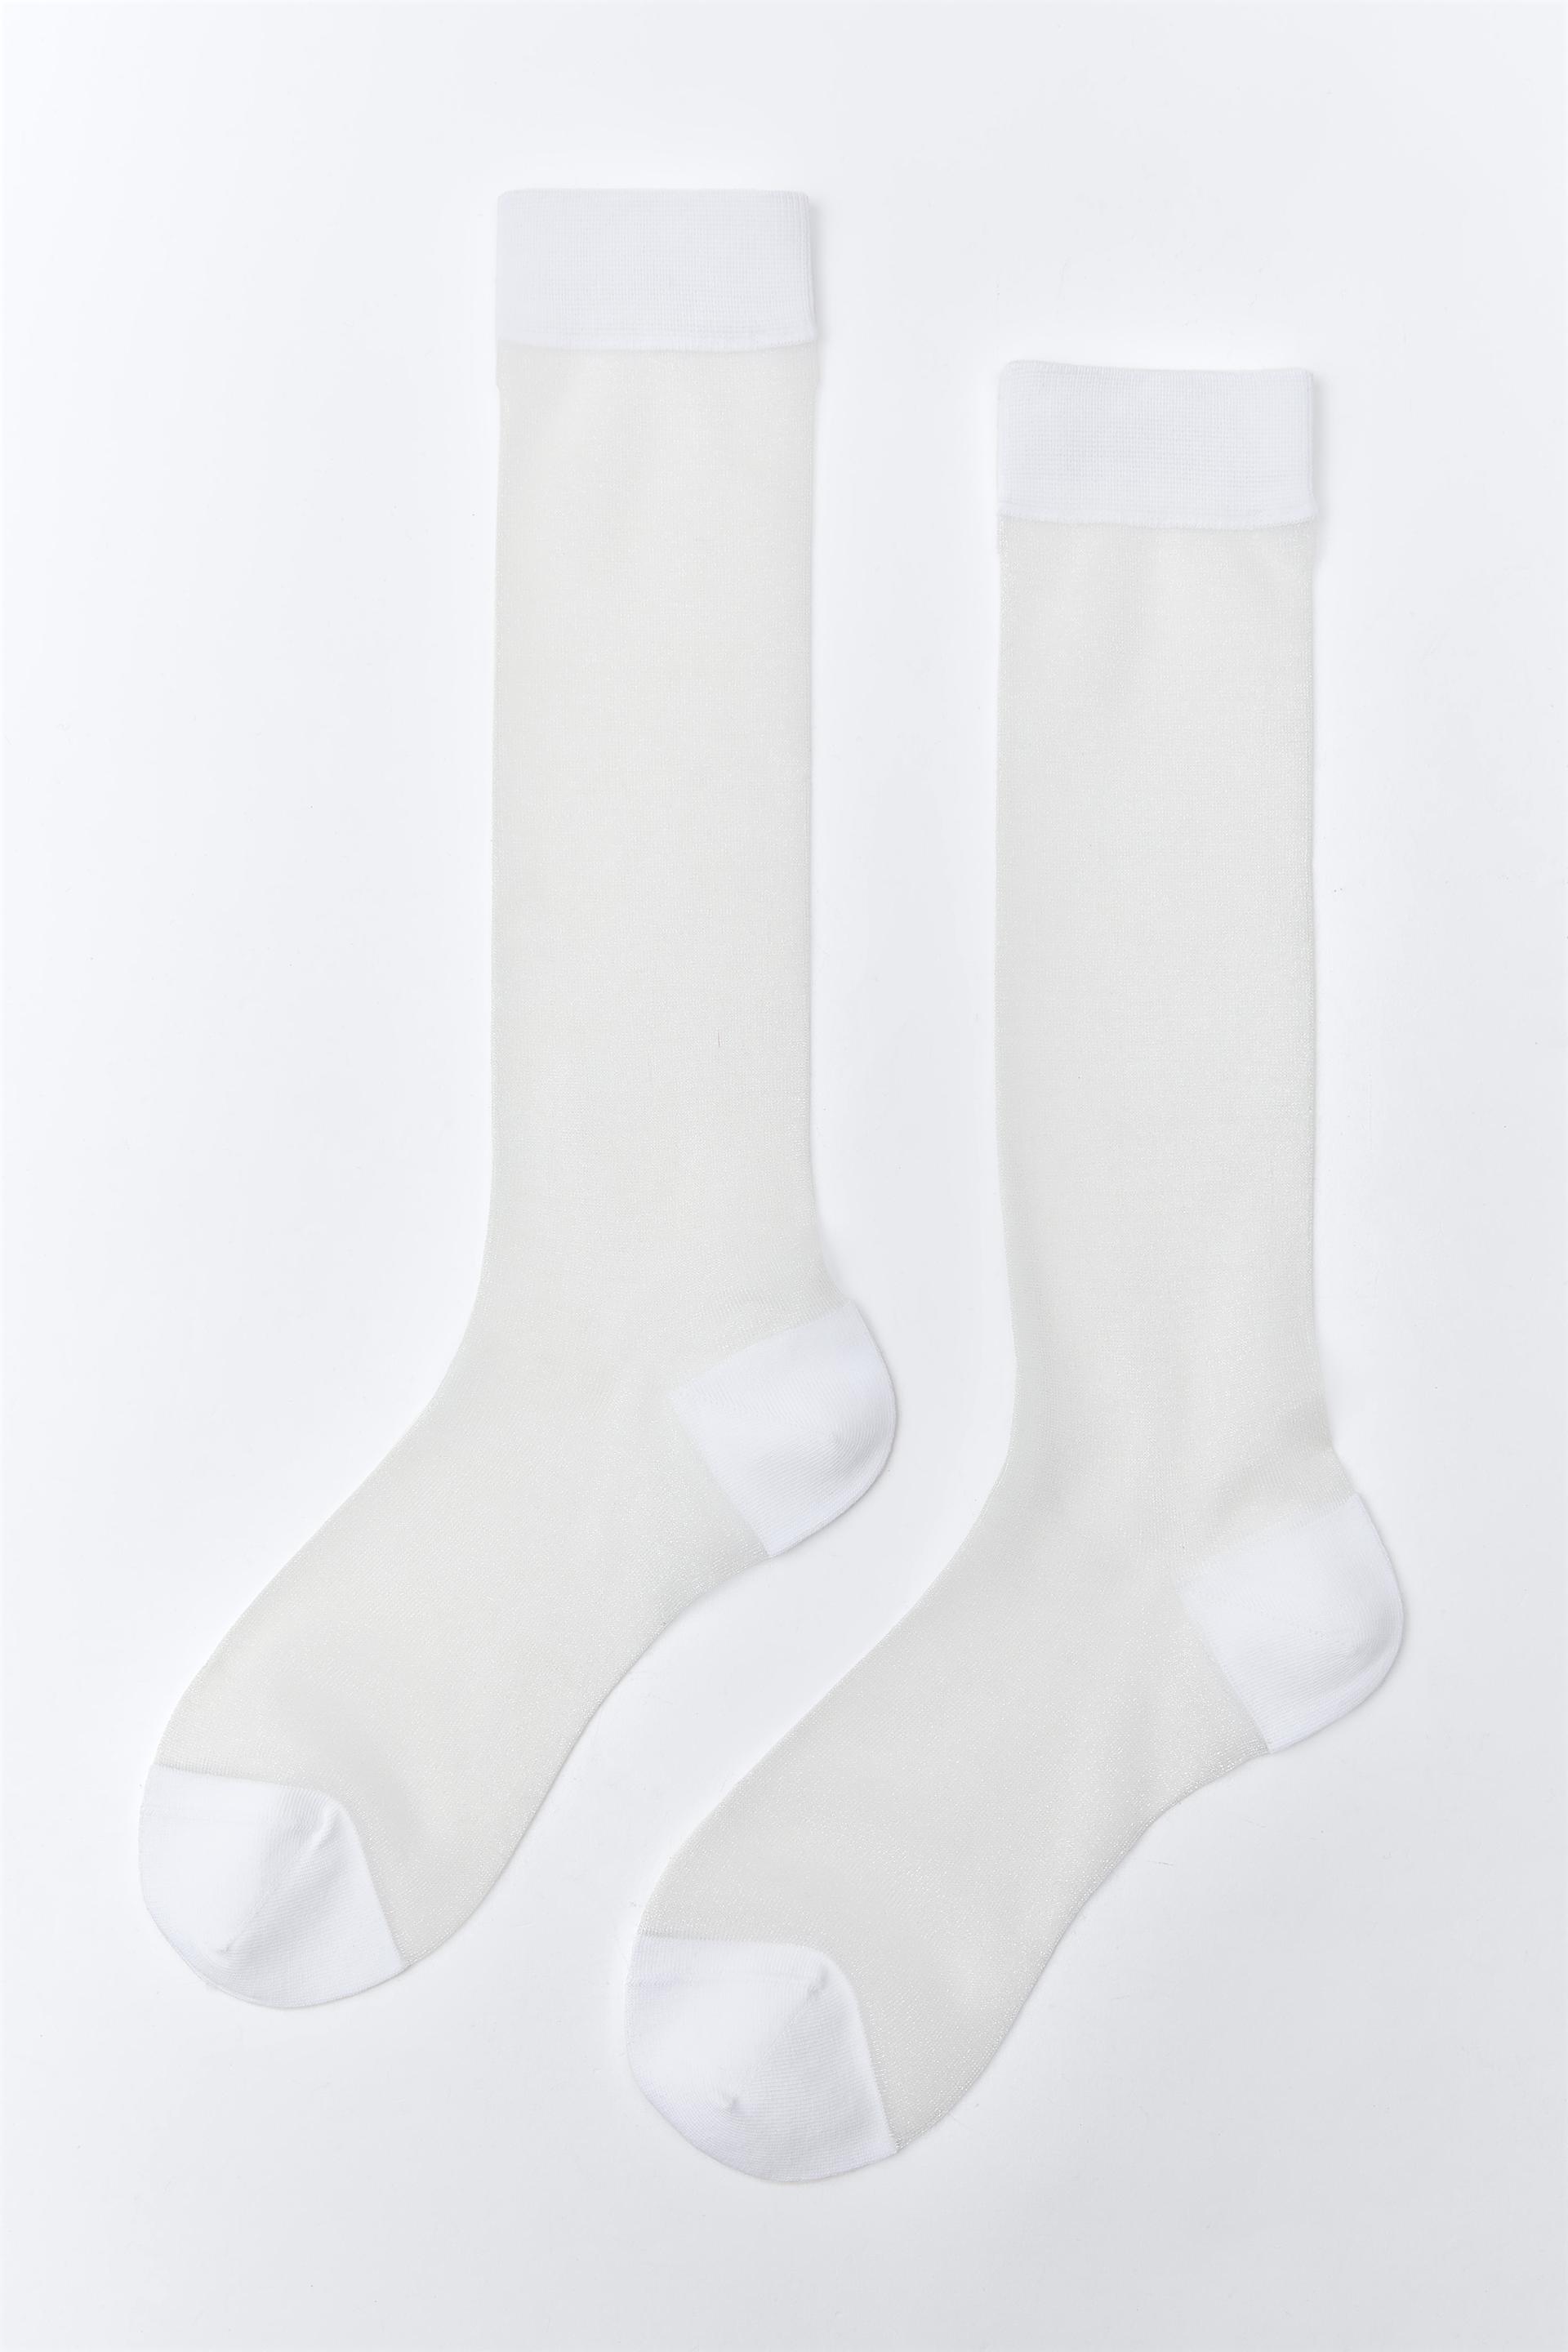 calcetines mujer invierno HS04 blanco, iMorbidoso